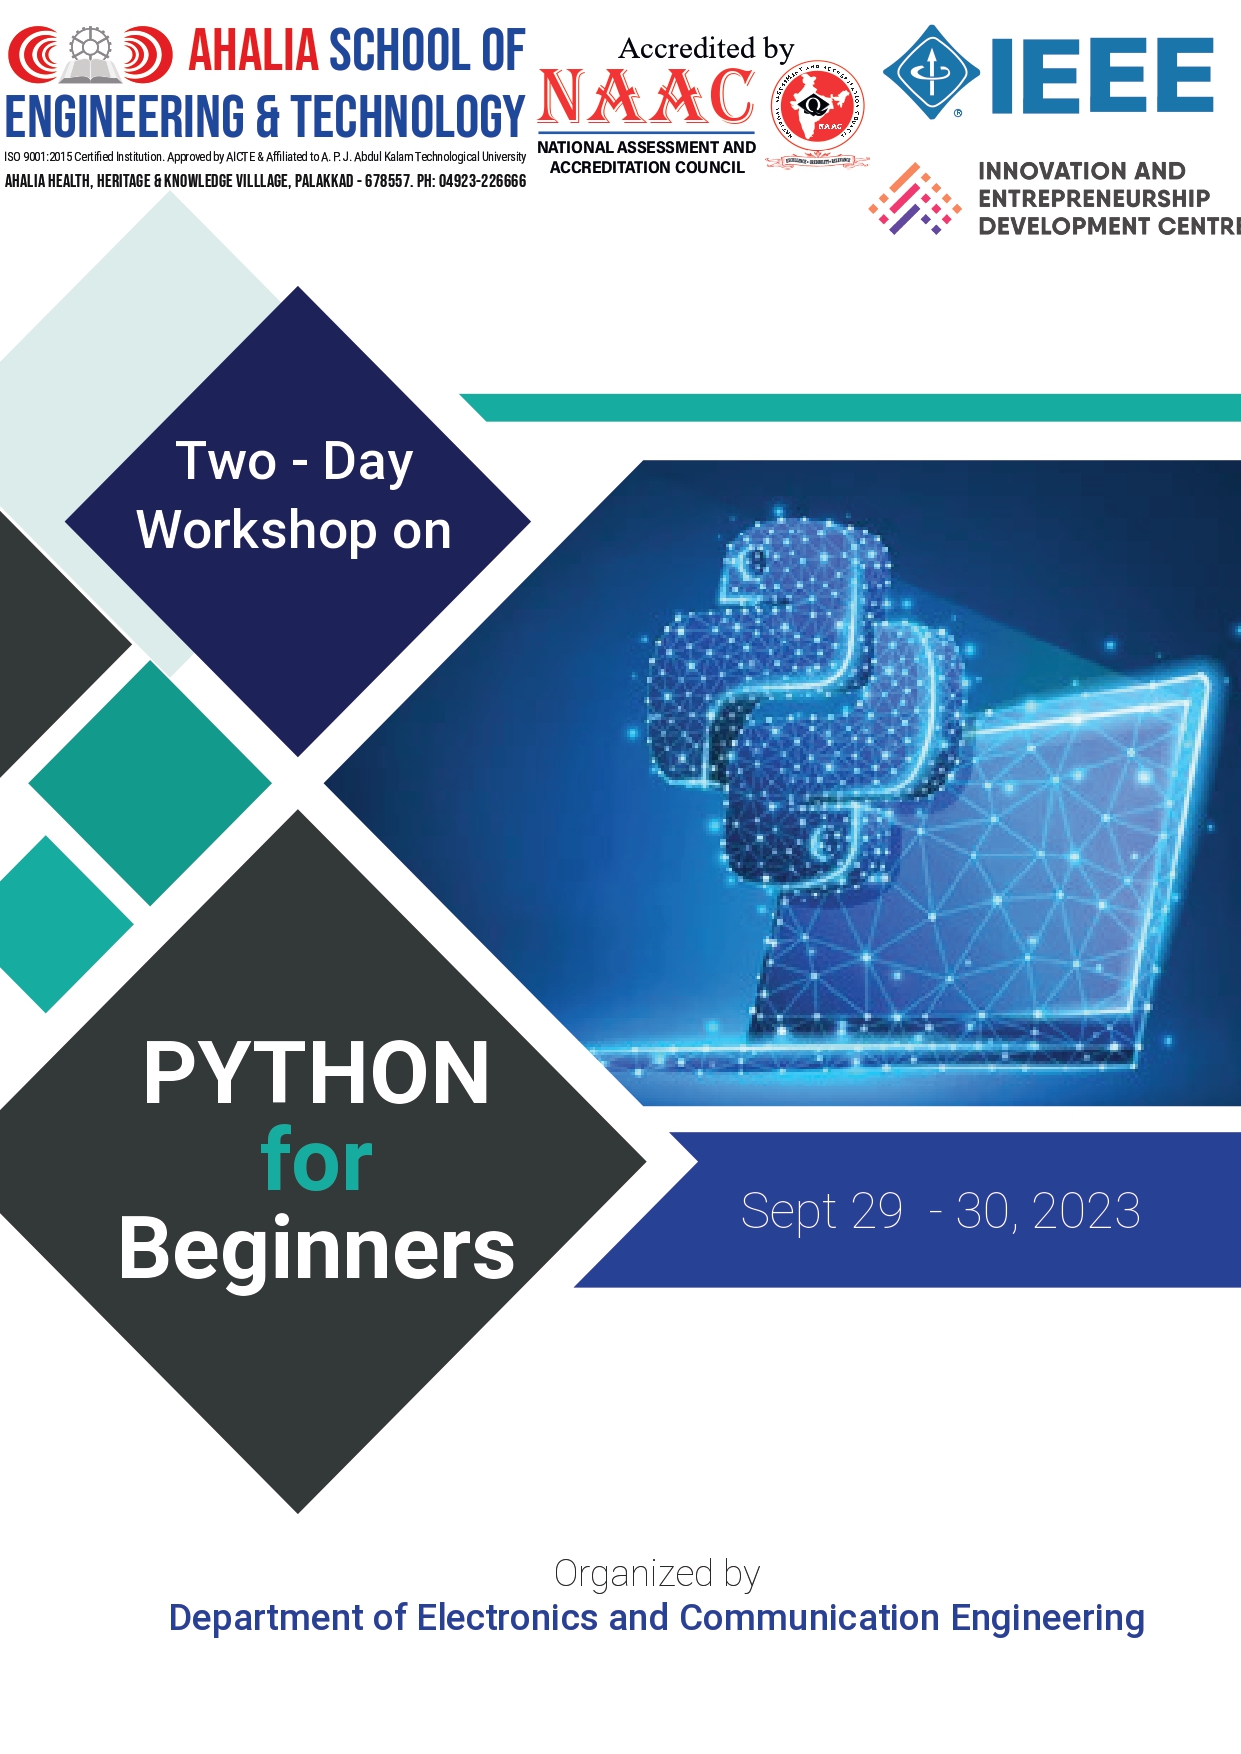 Workshop on Python for Beginners